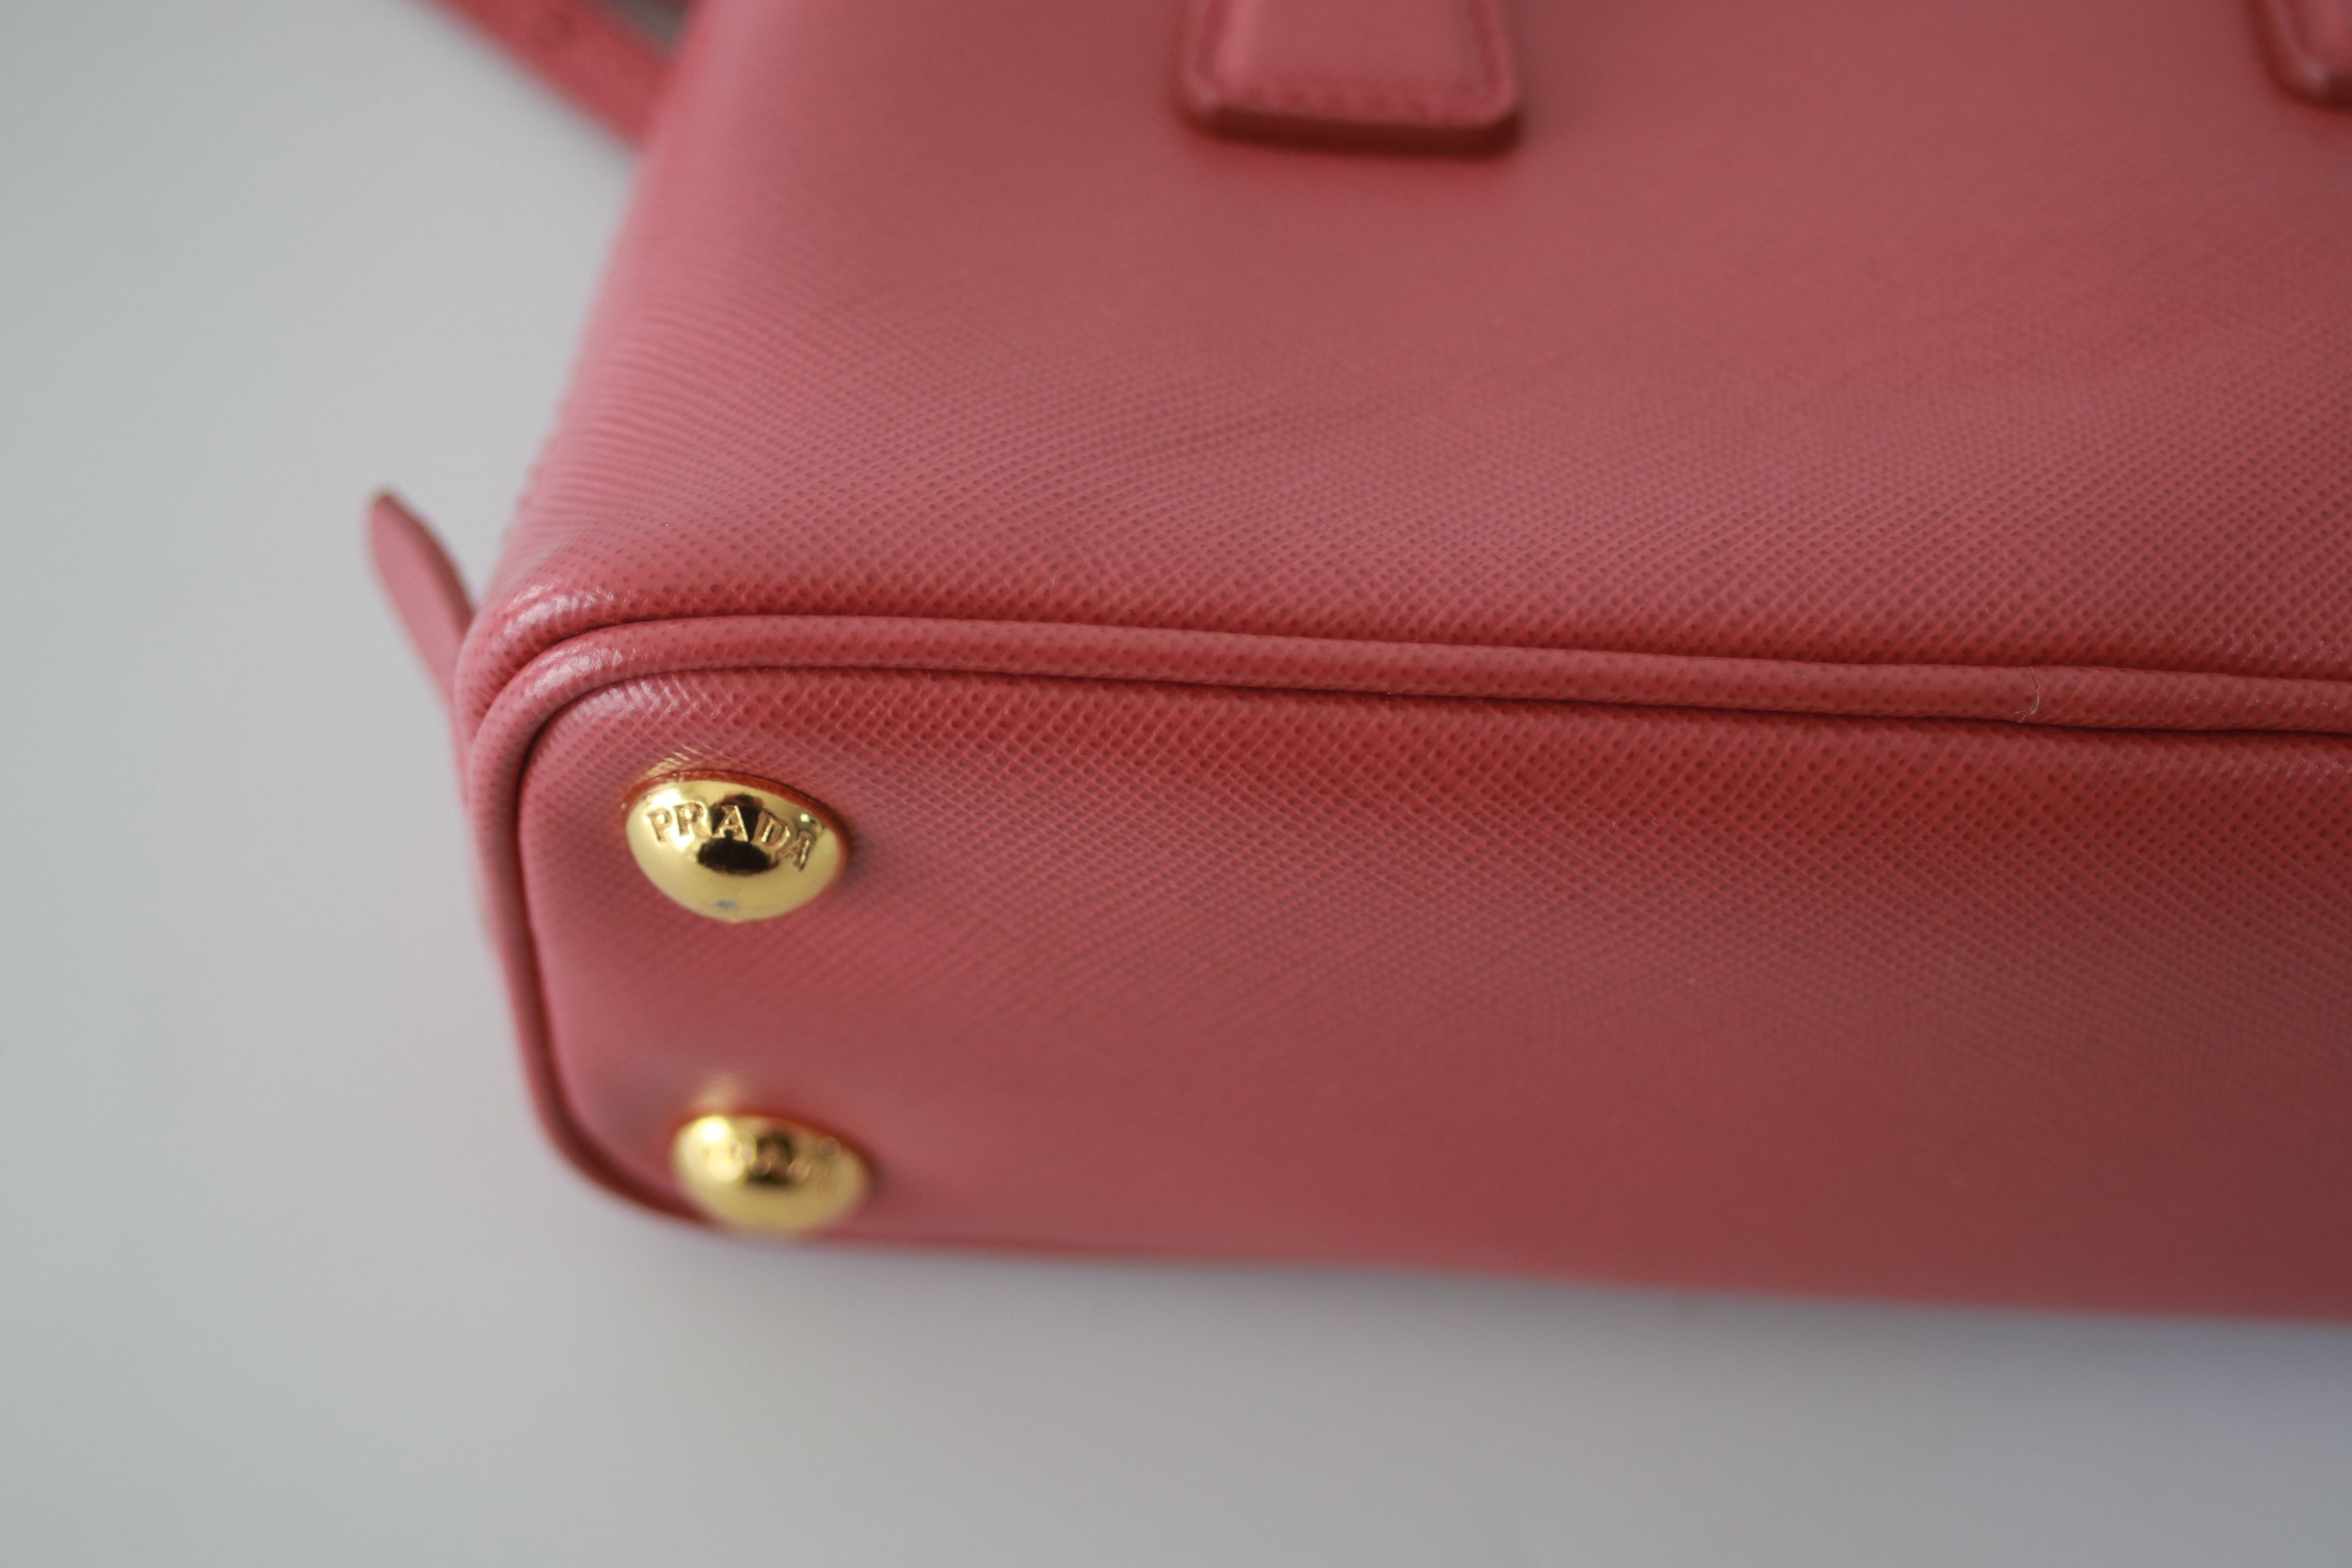 Prada Saffiano Mini Two Way Shoulder Bag Pink Used (7308)